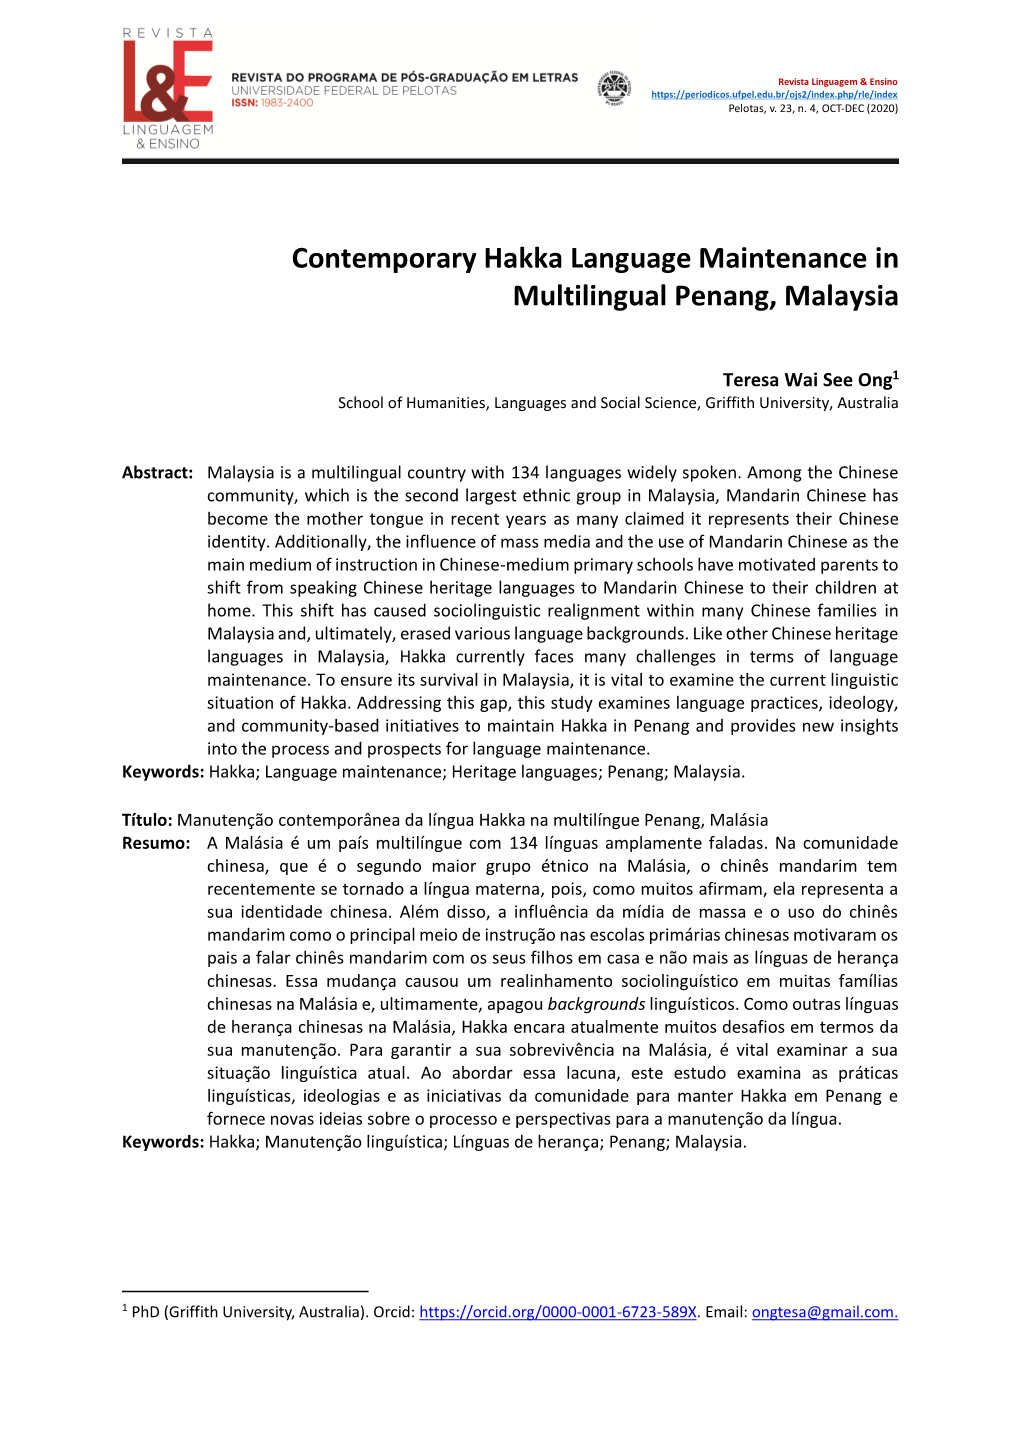 Contemporary Hakka Language Maintenance in Multilingual Penang, Malaysia